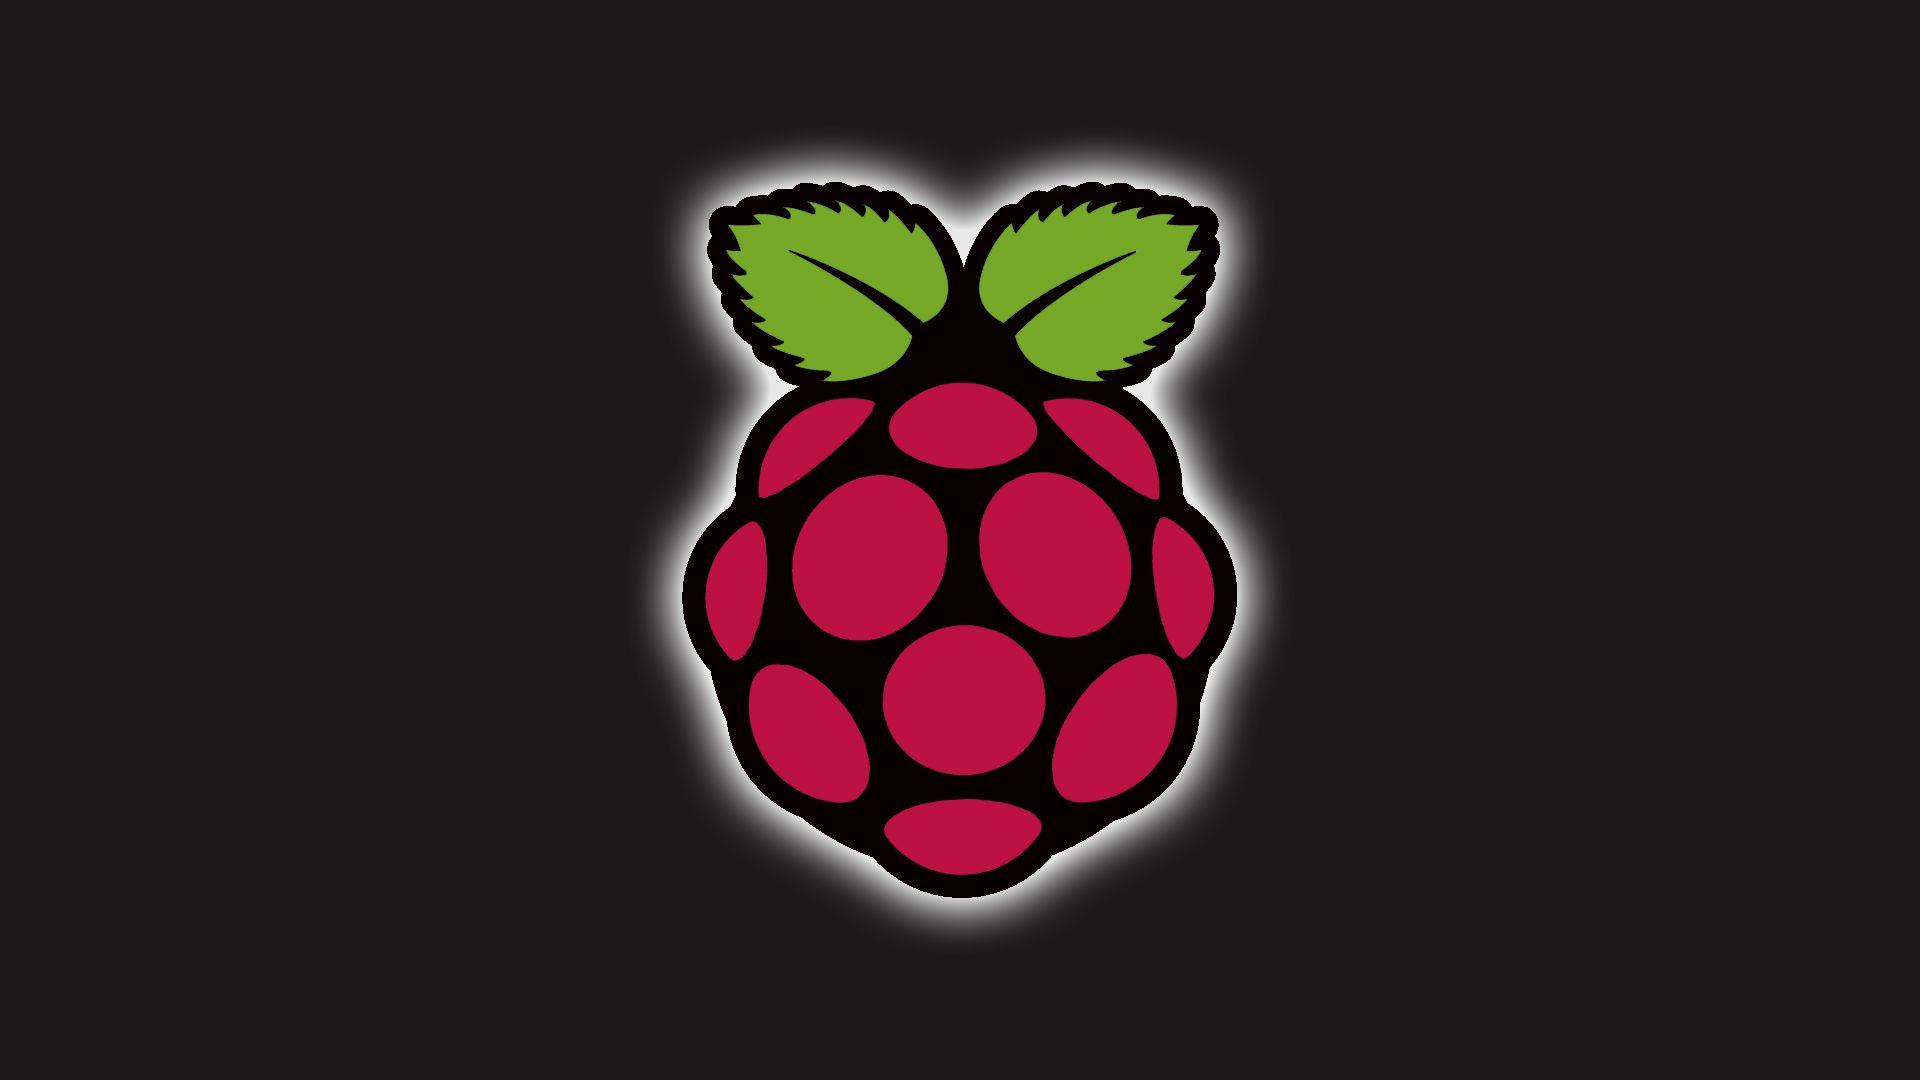 Raspberry Pi Wallpaper